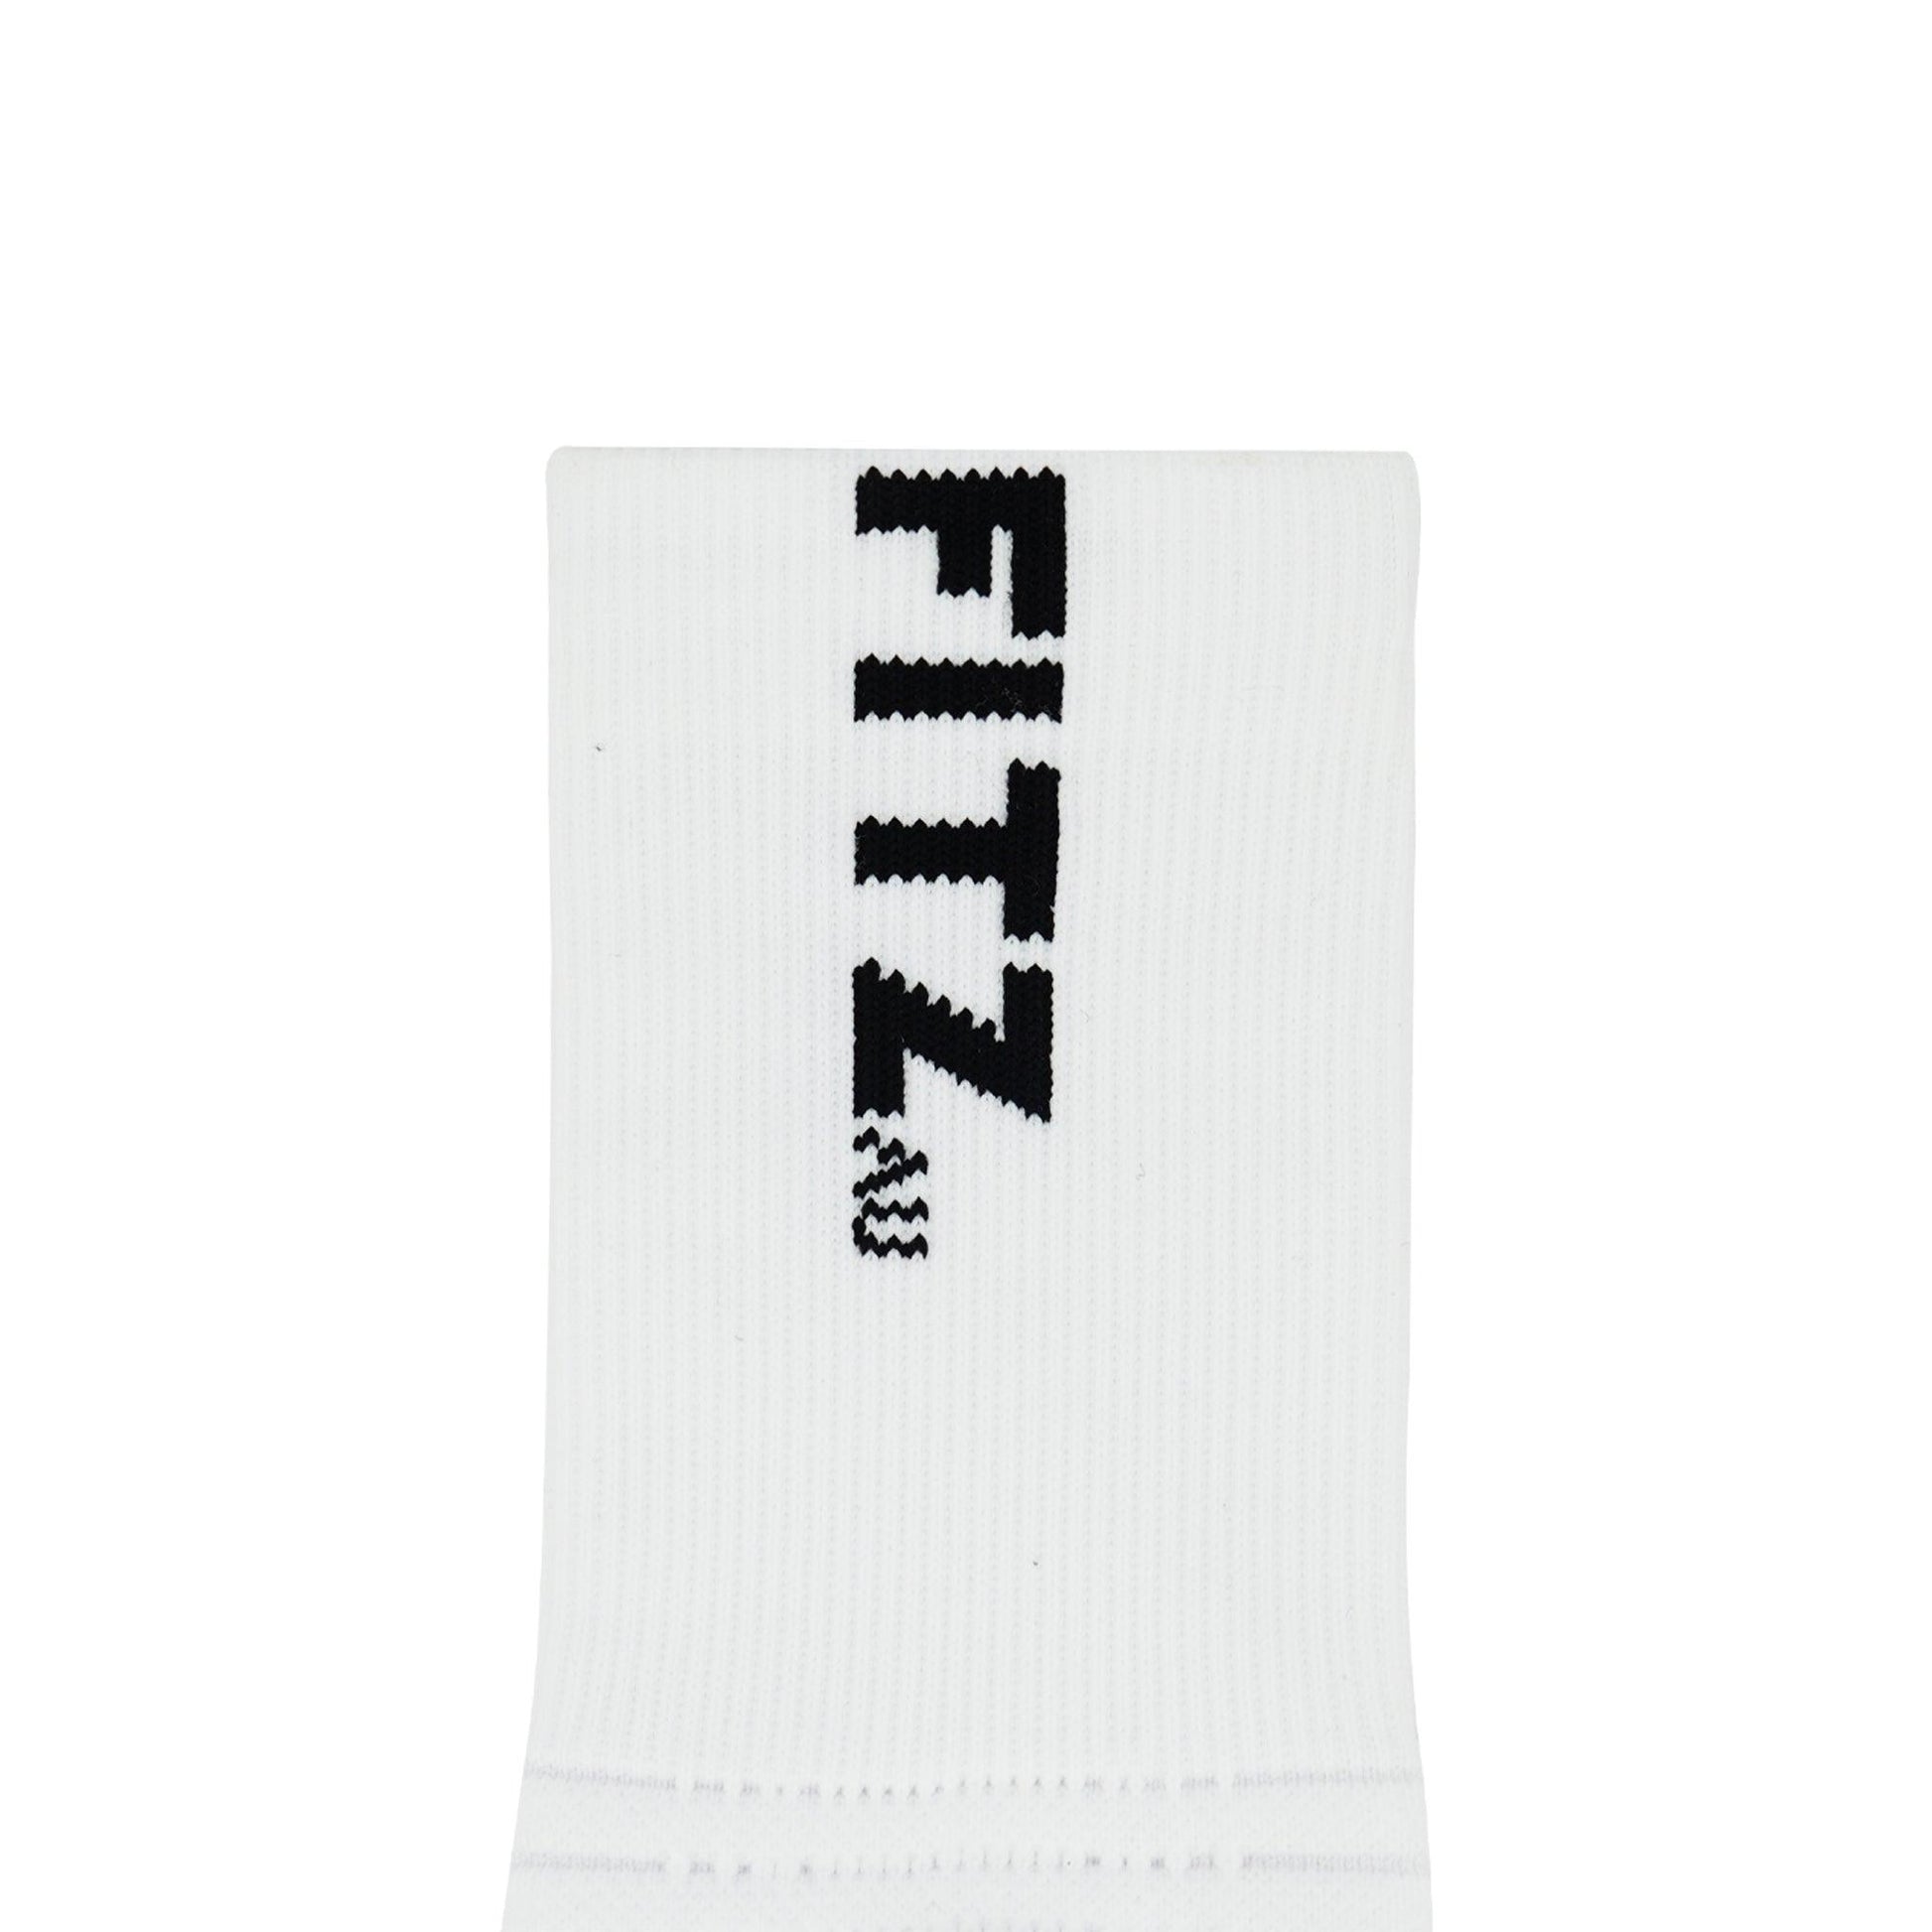 Sock Sleeve with Grip socks and Bandage Tape White – FITZ AUSTRALIA